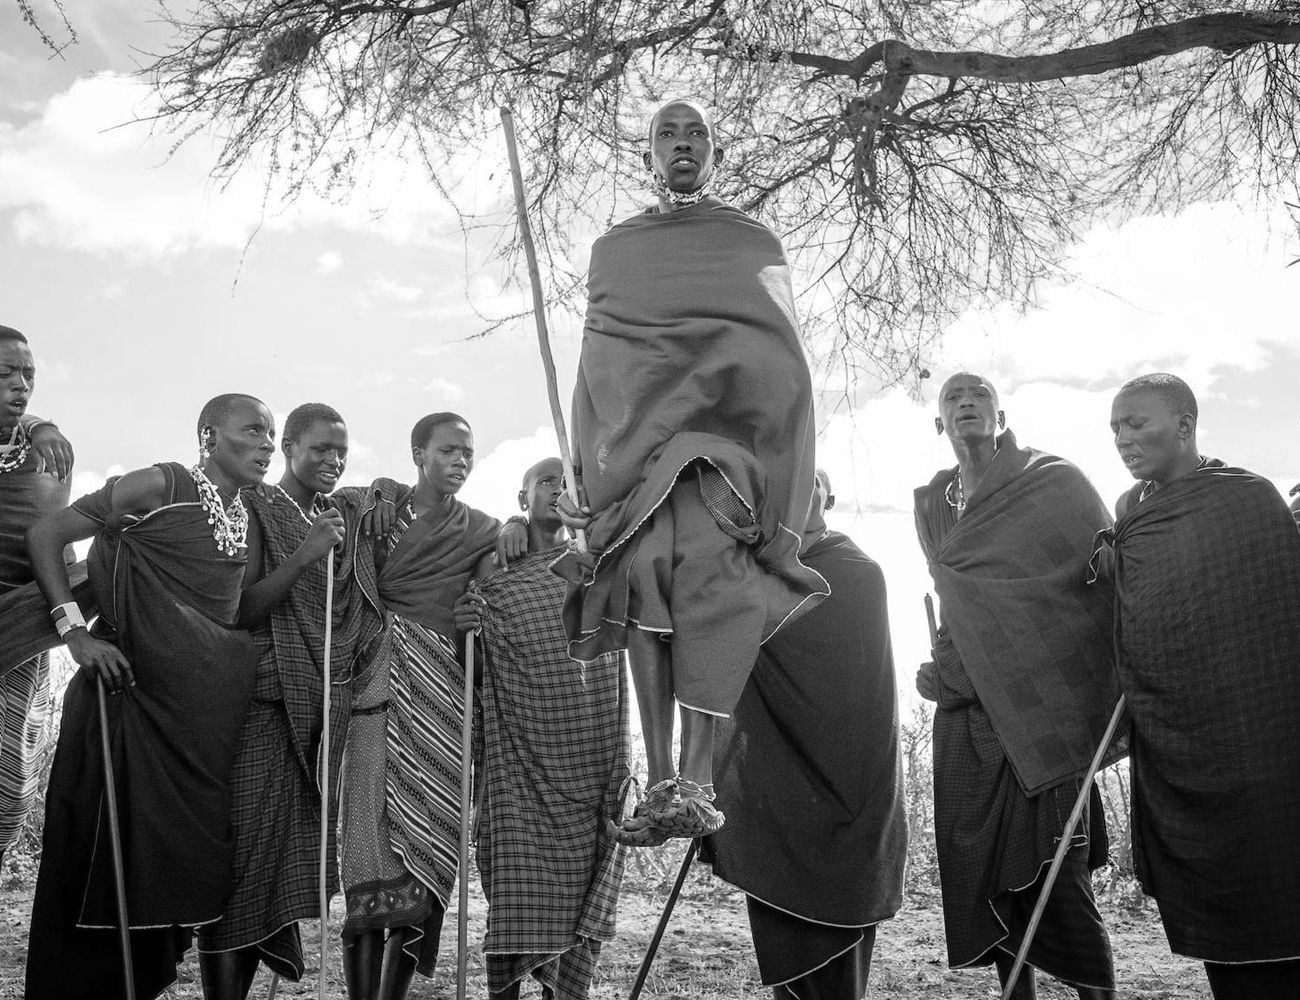 The Maasai Warriors Challenge in Tanzania